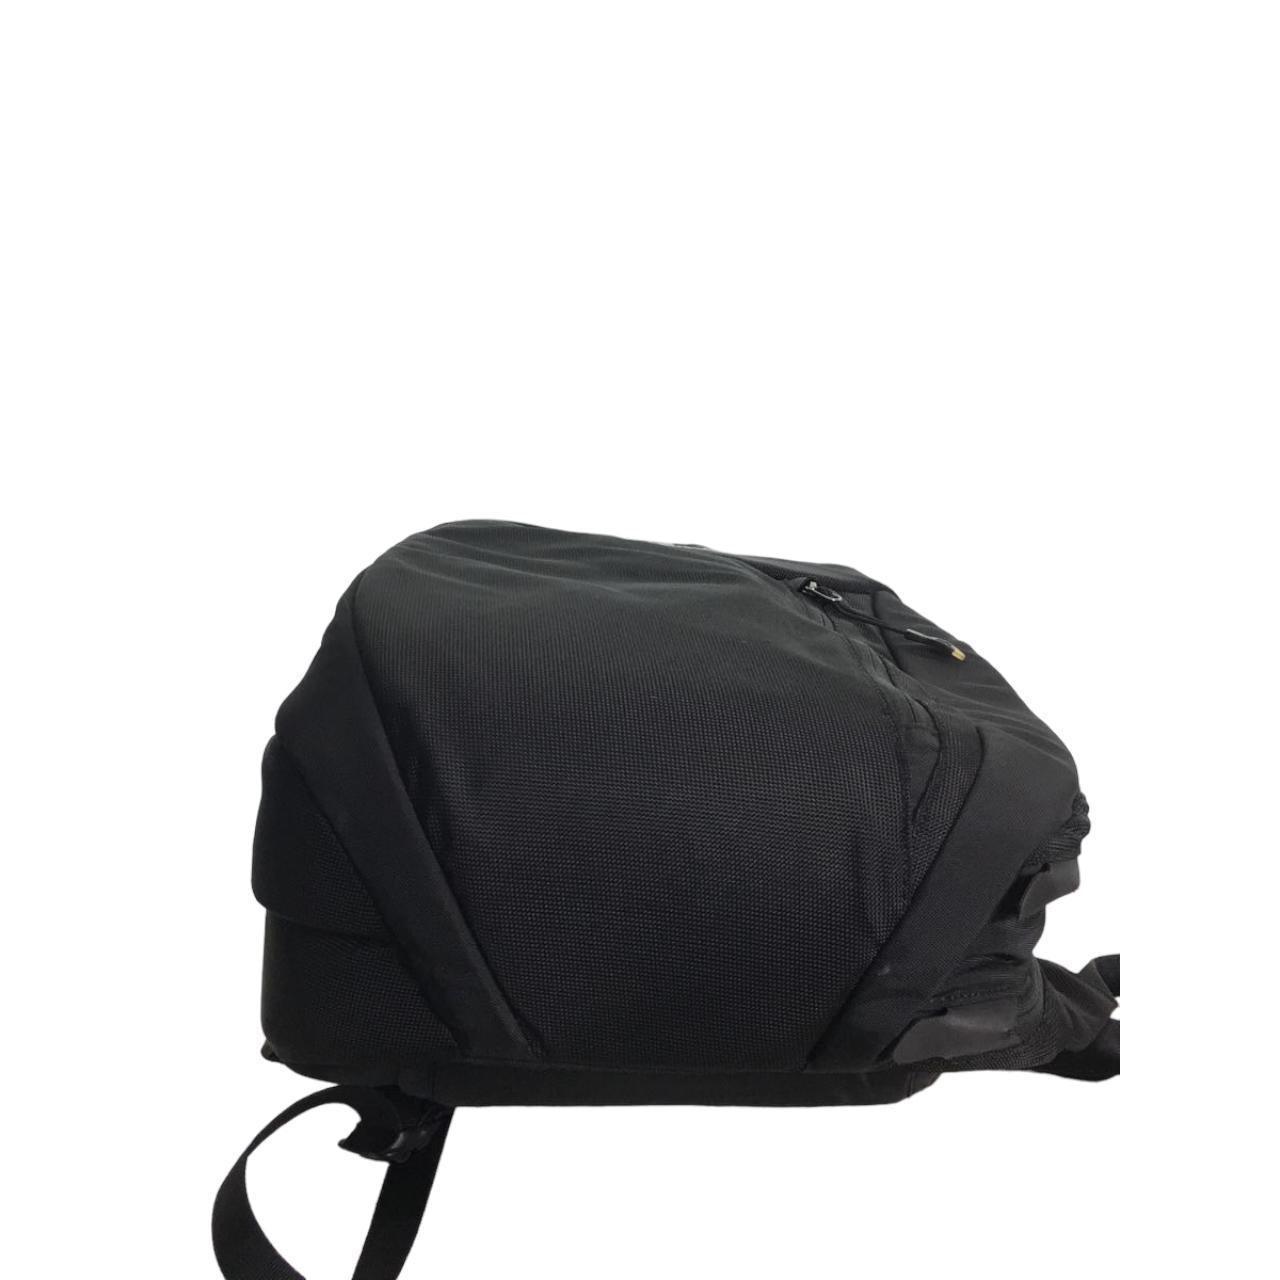 ARC'TERYX Backpack BLADE24 Nylon Black - Known Source